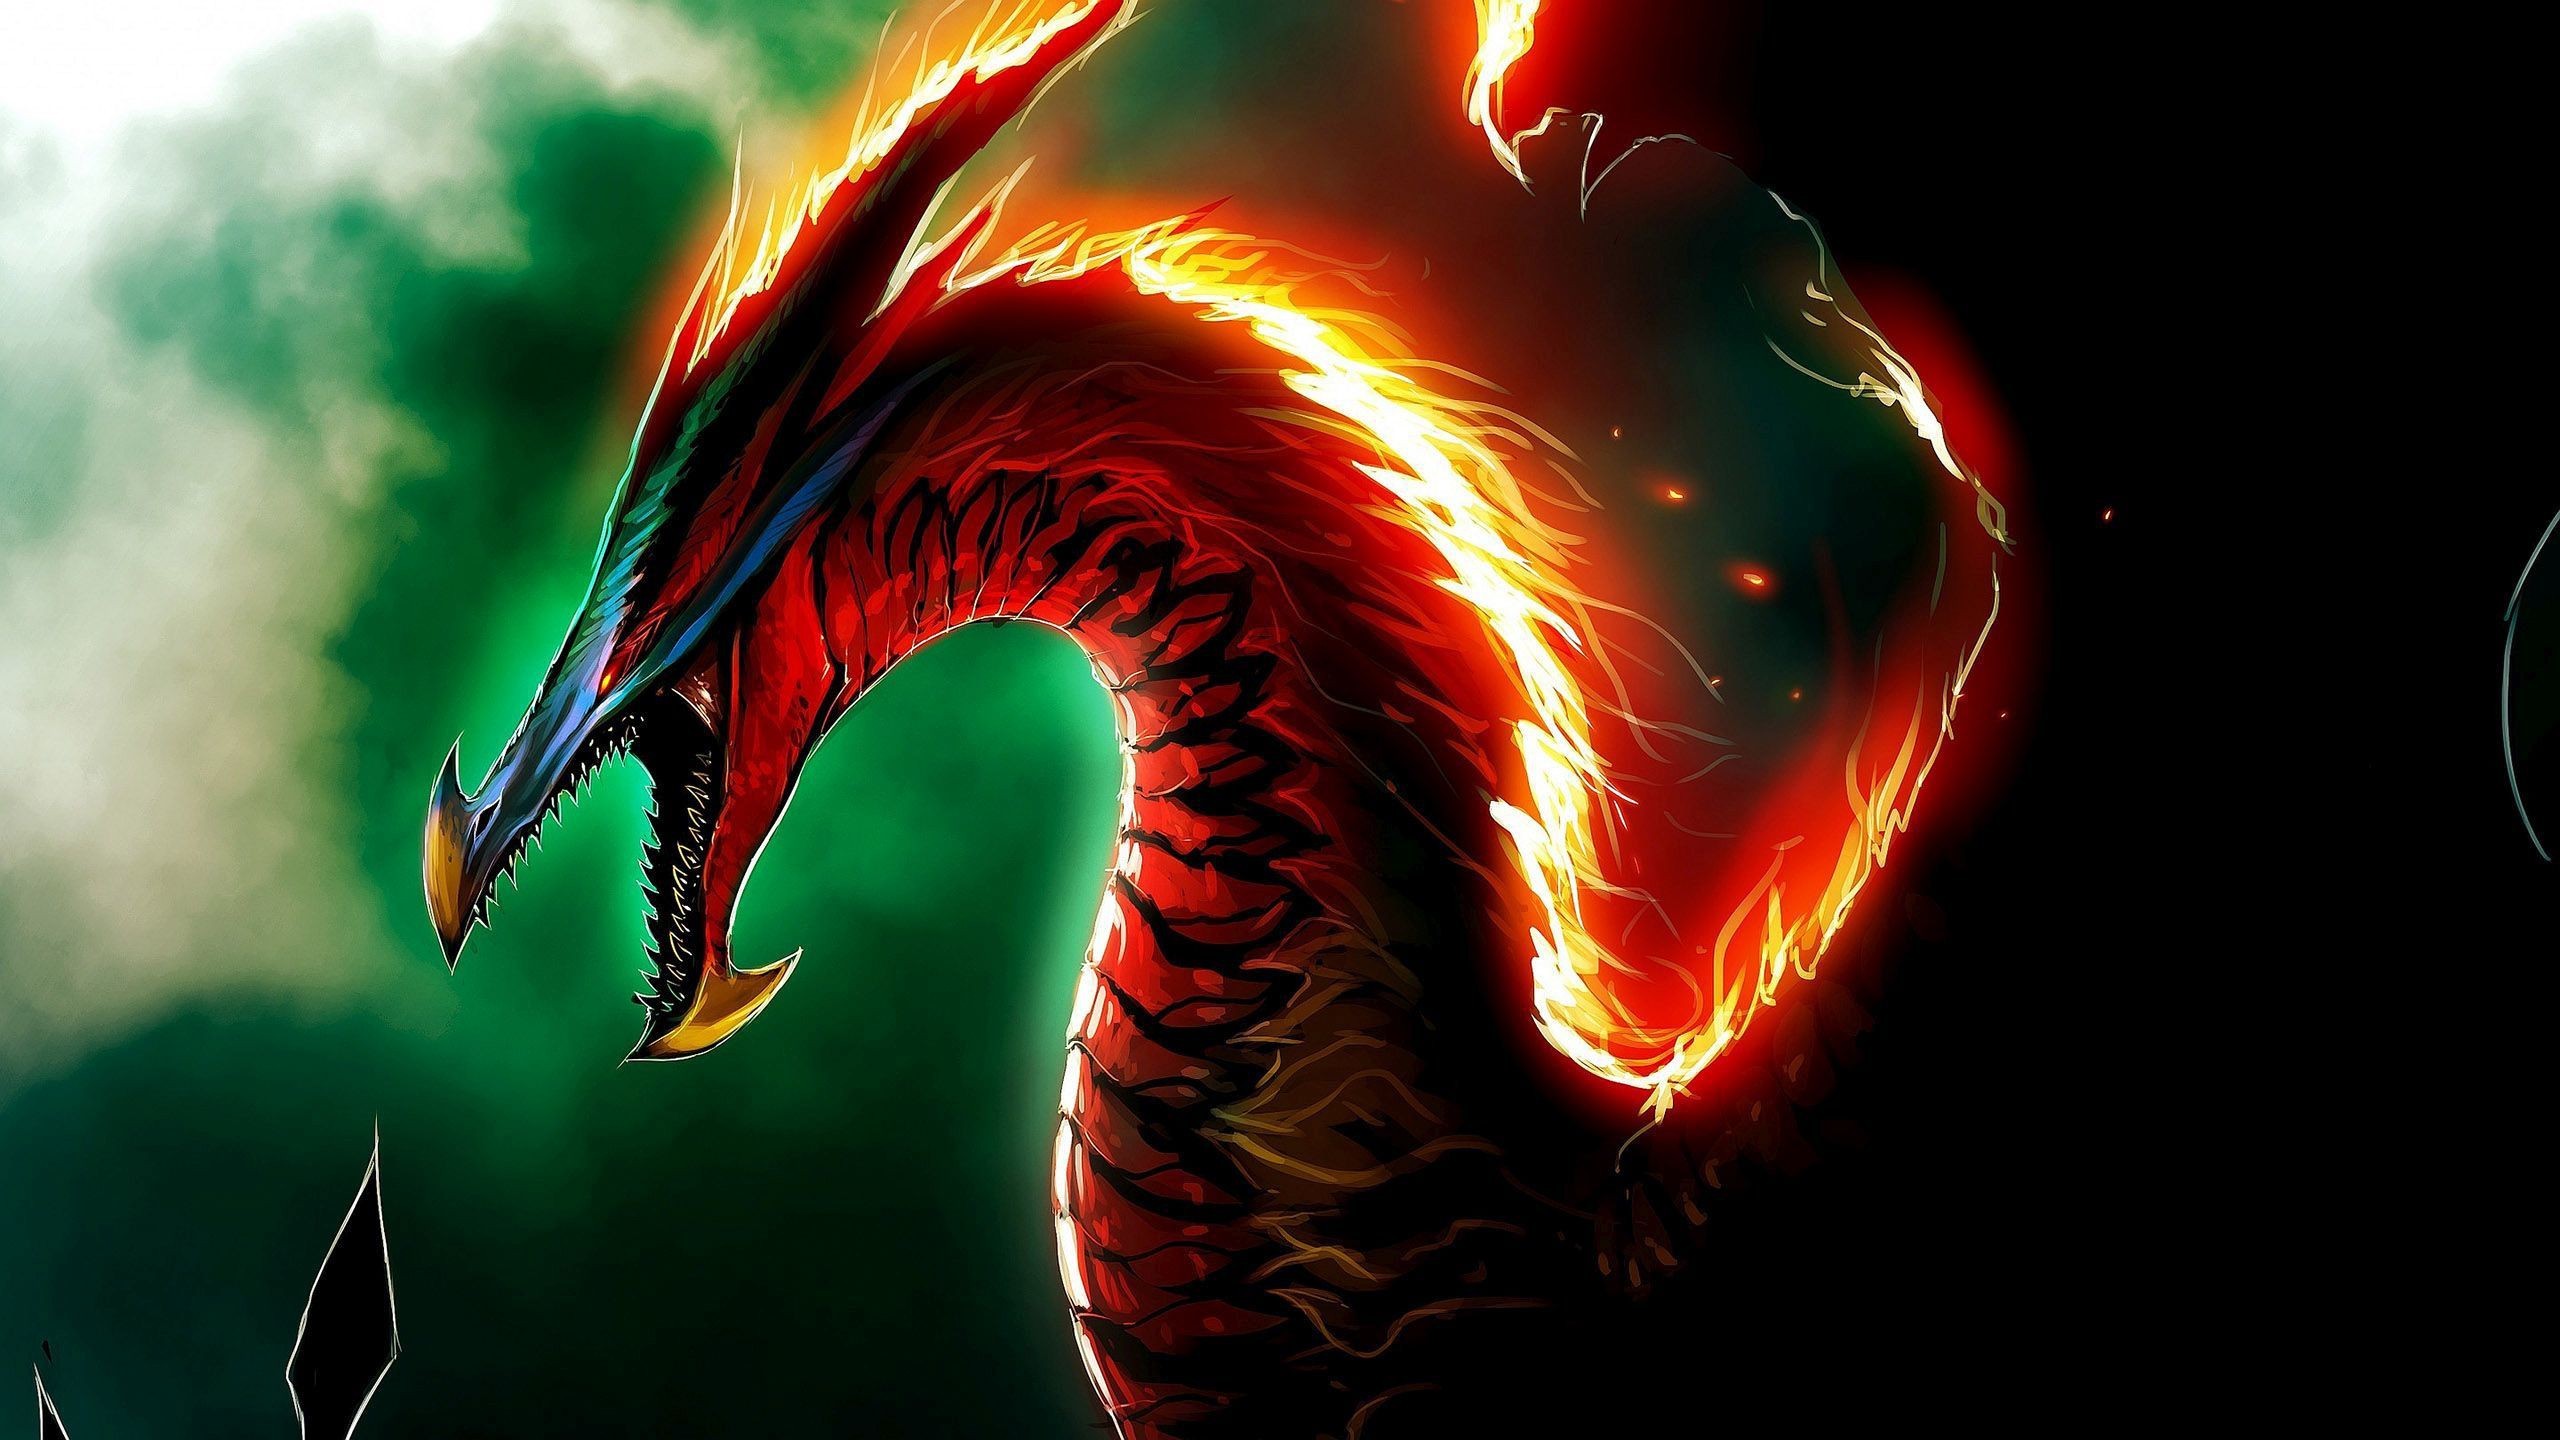 Red Fire Dragon Free - 2560x1440 Wallpaper 